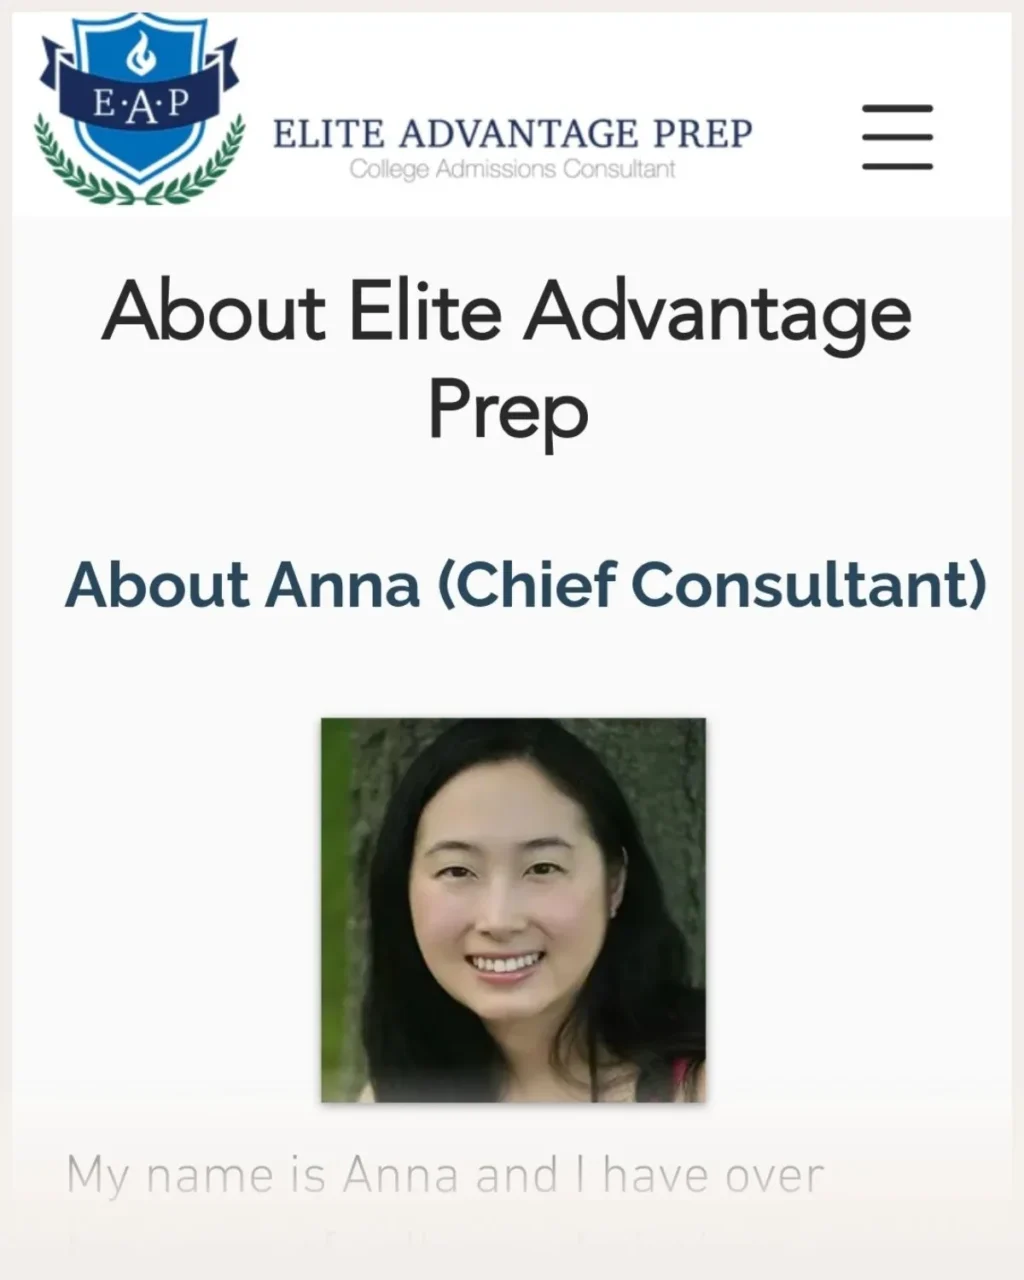 Elite Advantage Prep website